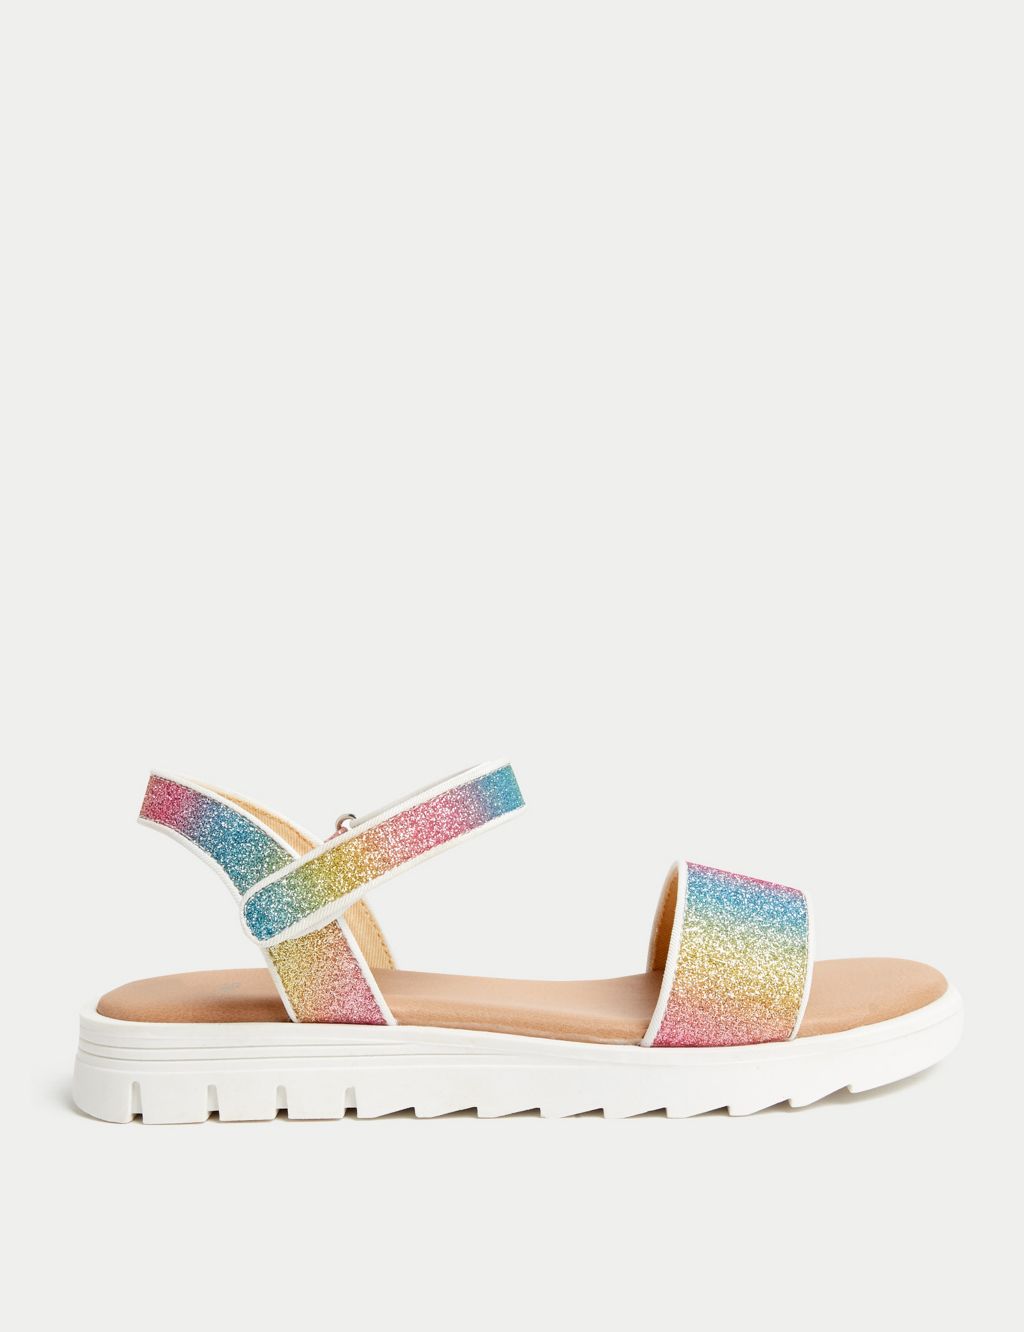 Kids' Rainbow Glitter Sandals (13 Small - 6 Large) image 1